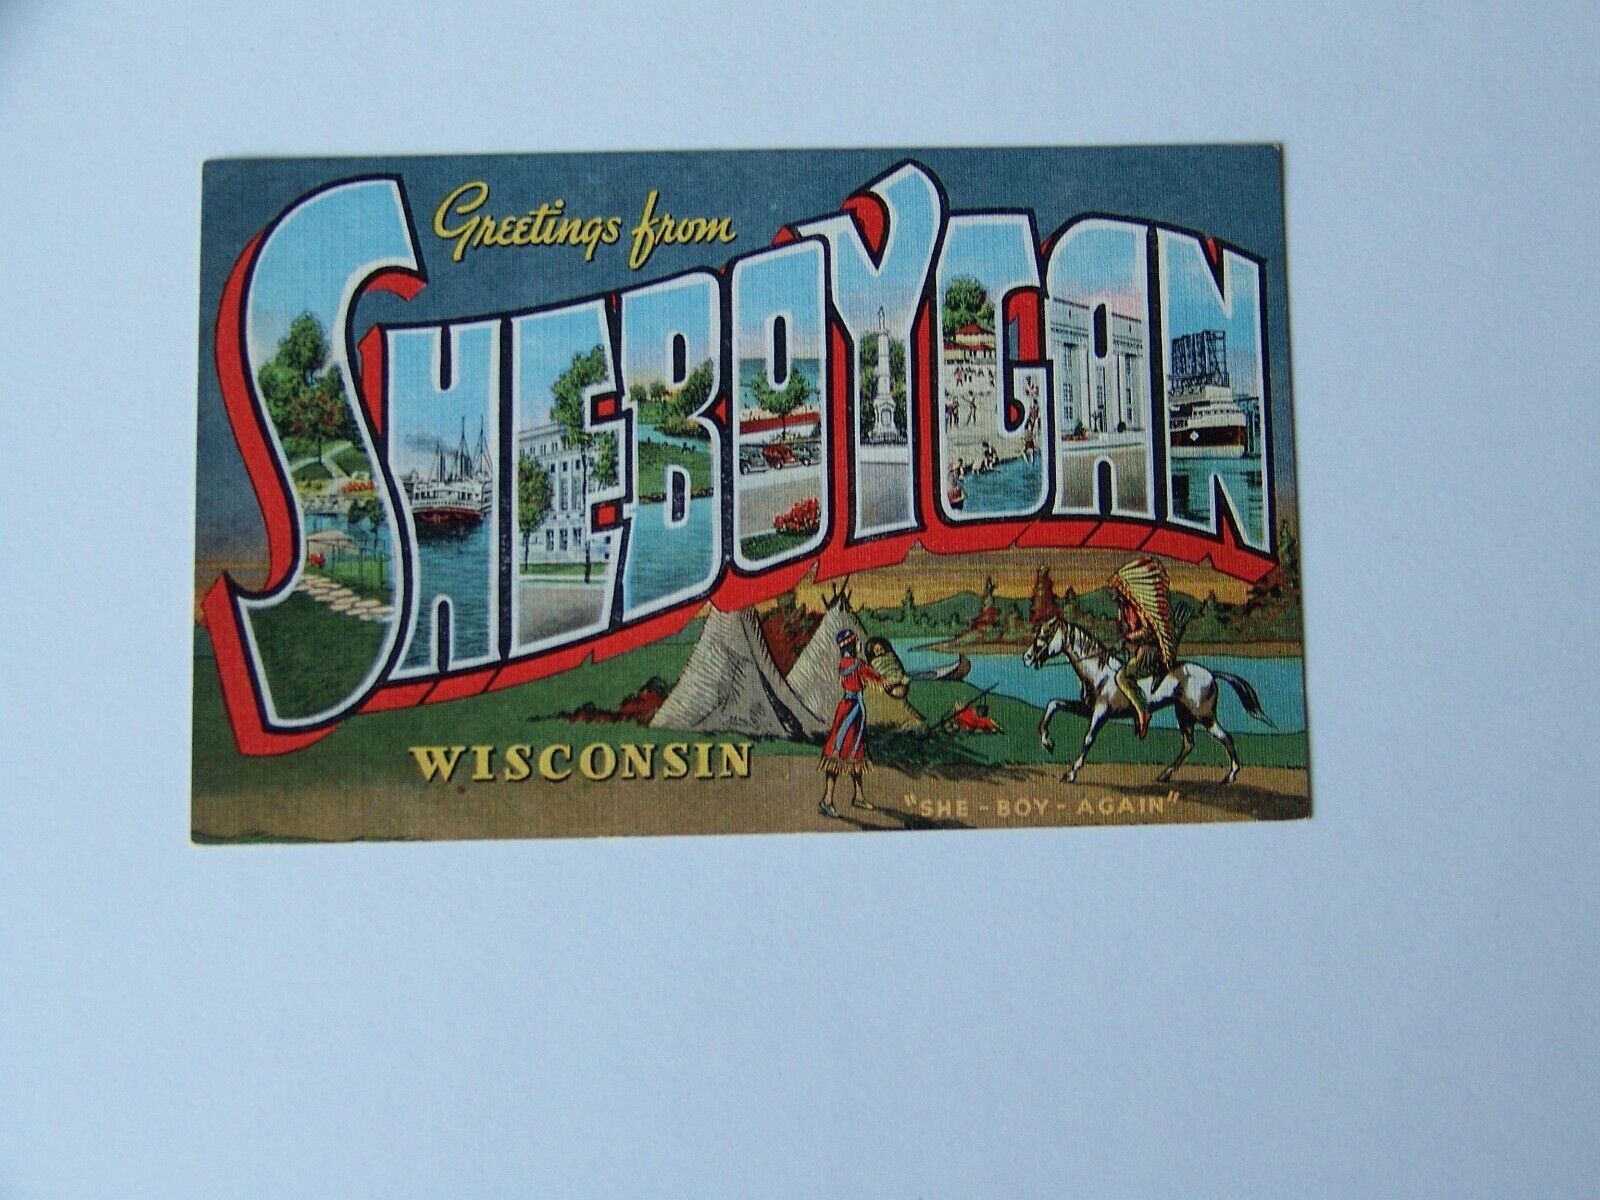 Sheboygan Wisconsin WI Large Letter Greetings She Boy Again